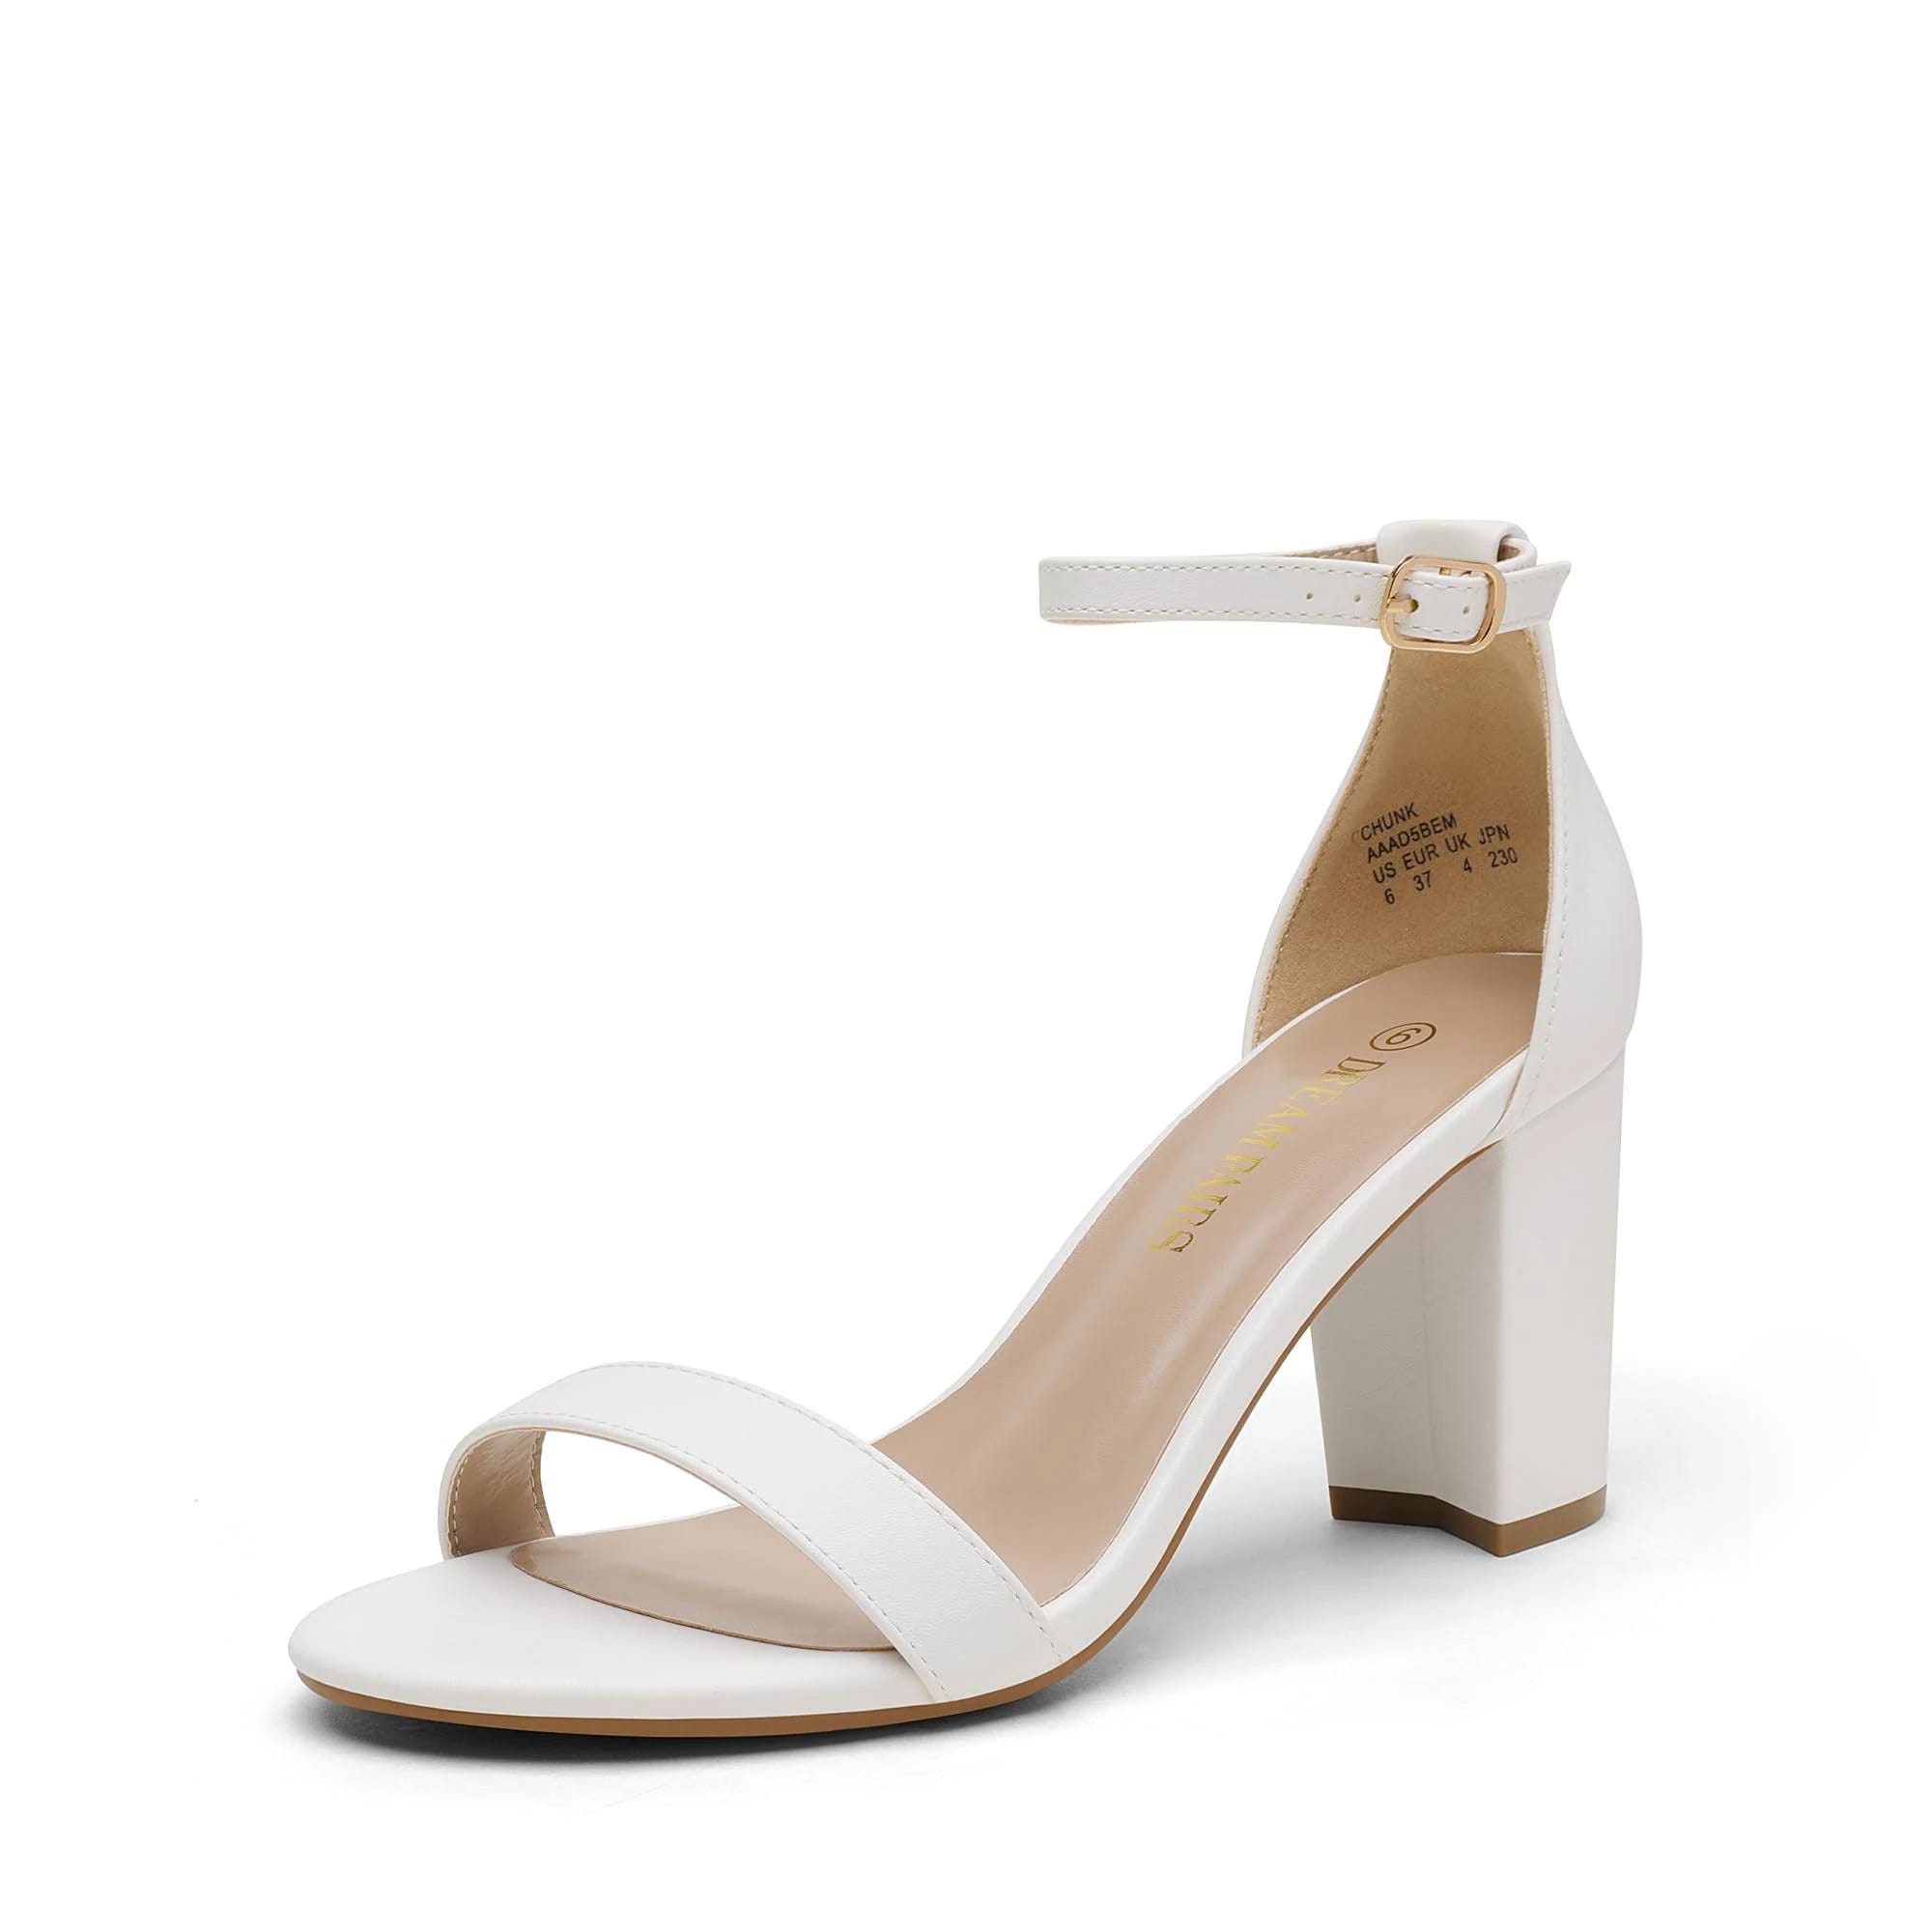 Comfortable and Stylish Platform Heeled Sandals | Image